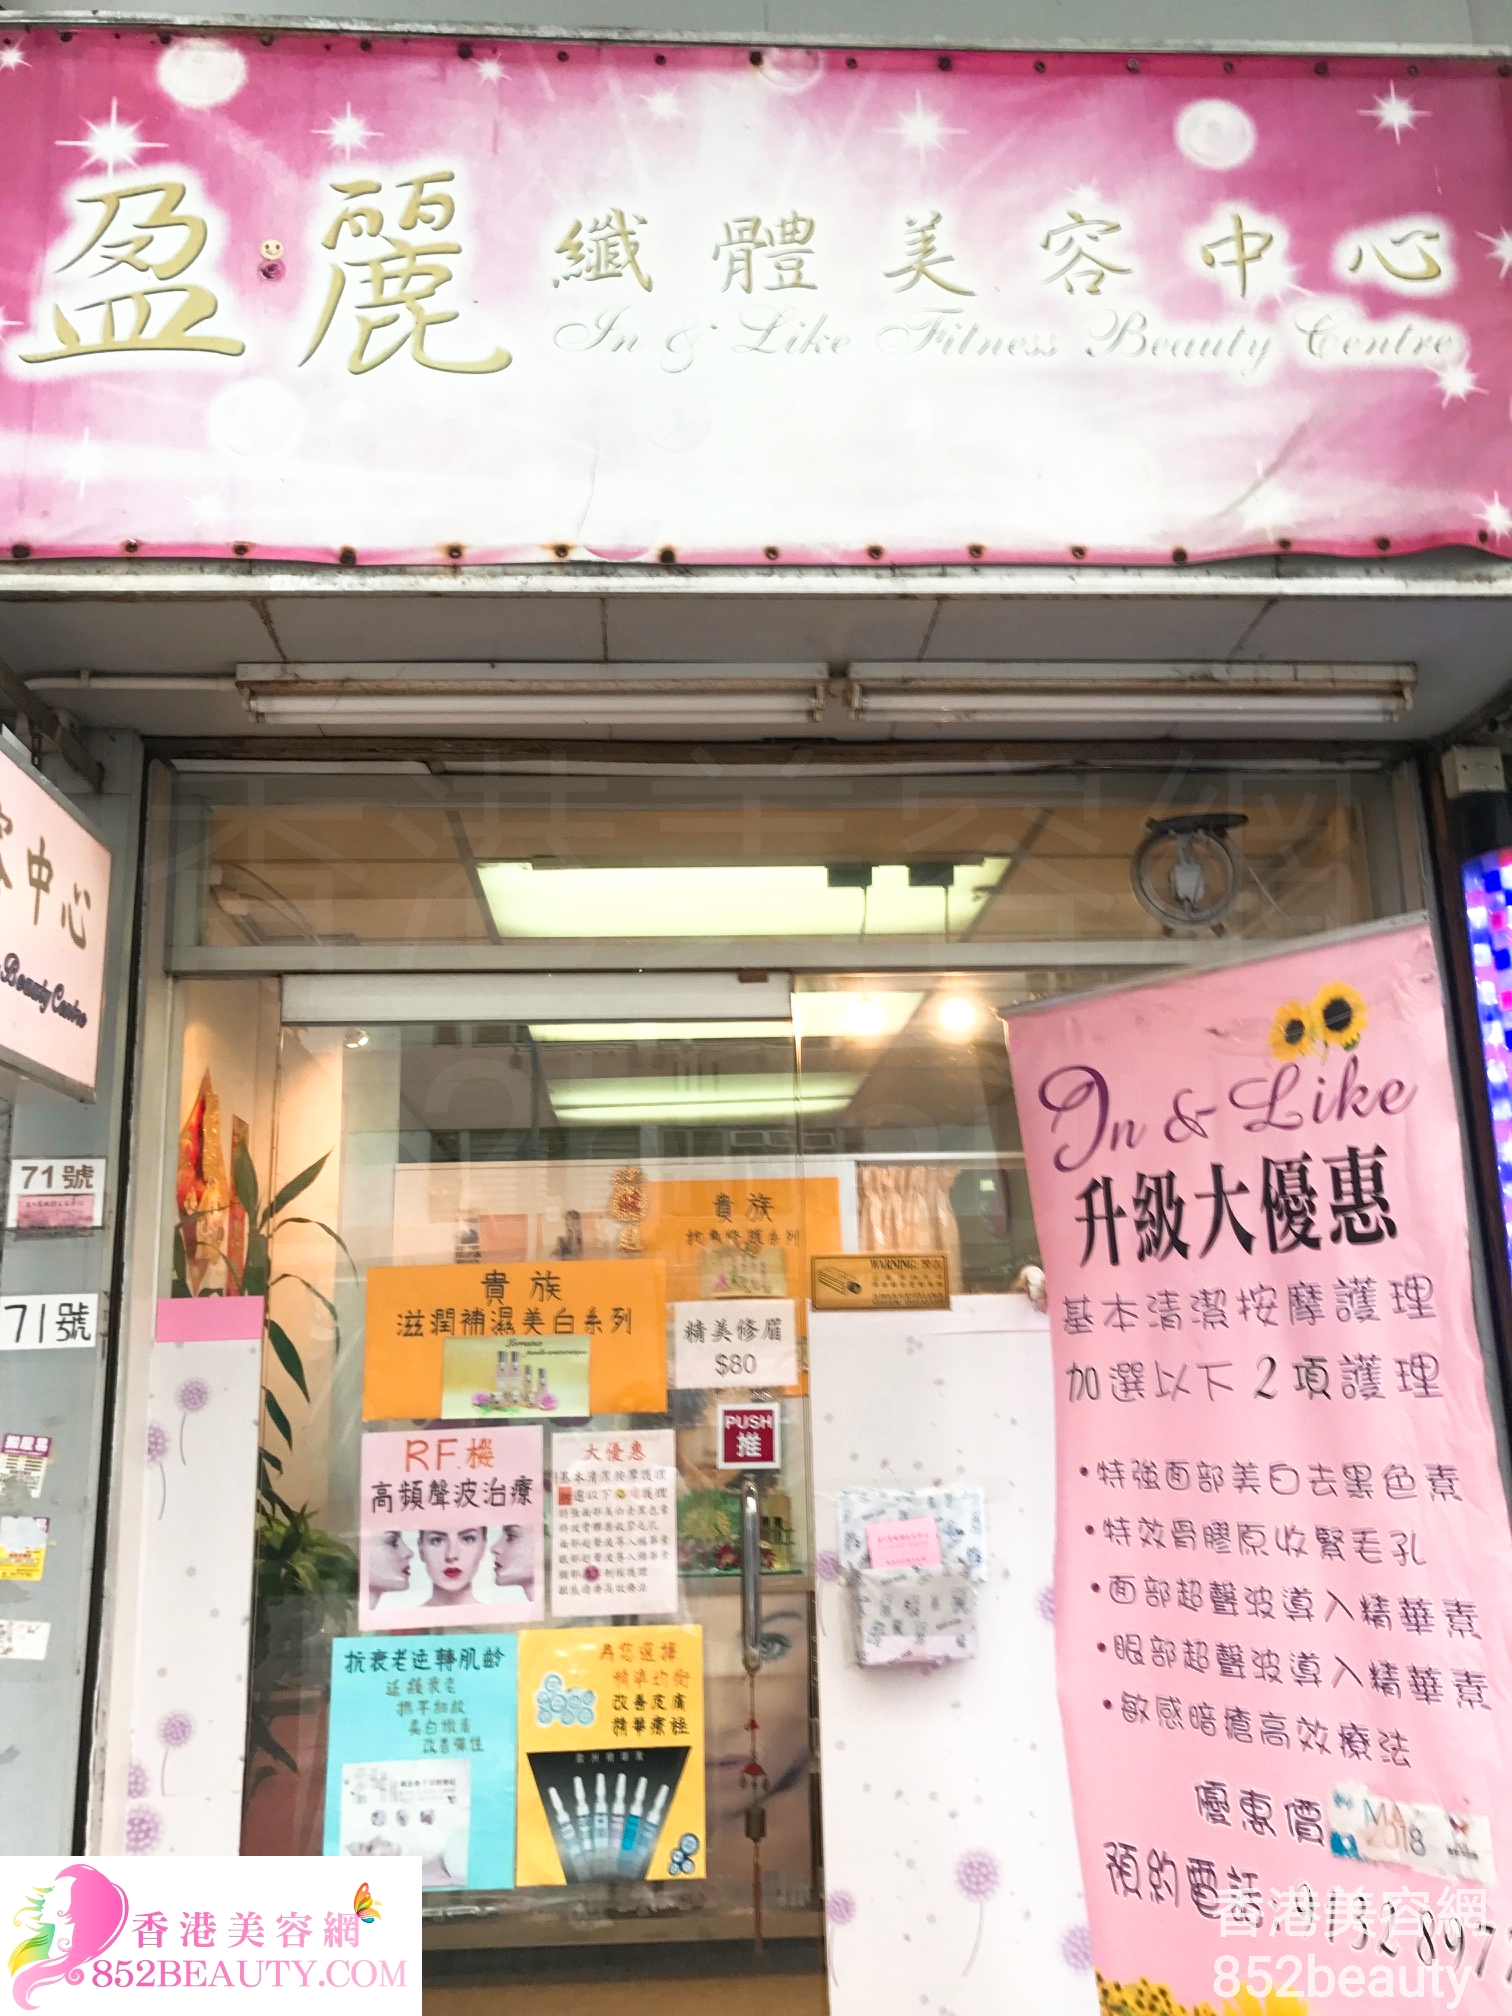 香港美容網 Hong Kong Beauty Salon 美容院 / 美容師: 盈麗纖體美容中心 In & Like Beauty Centre